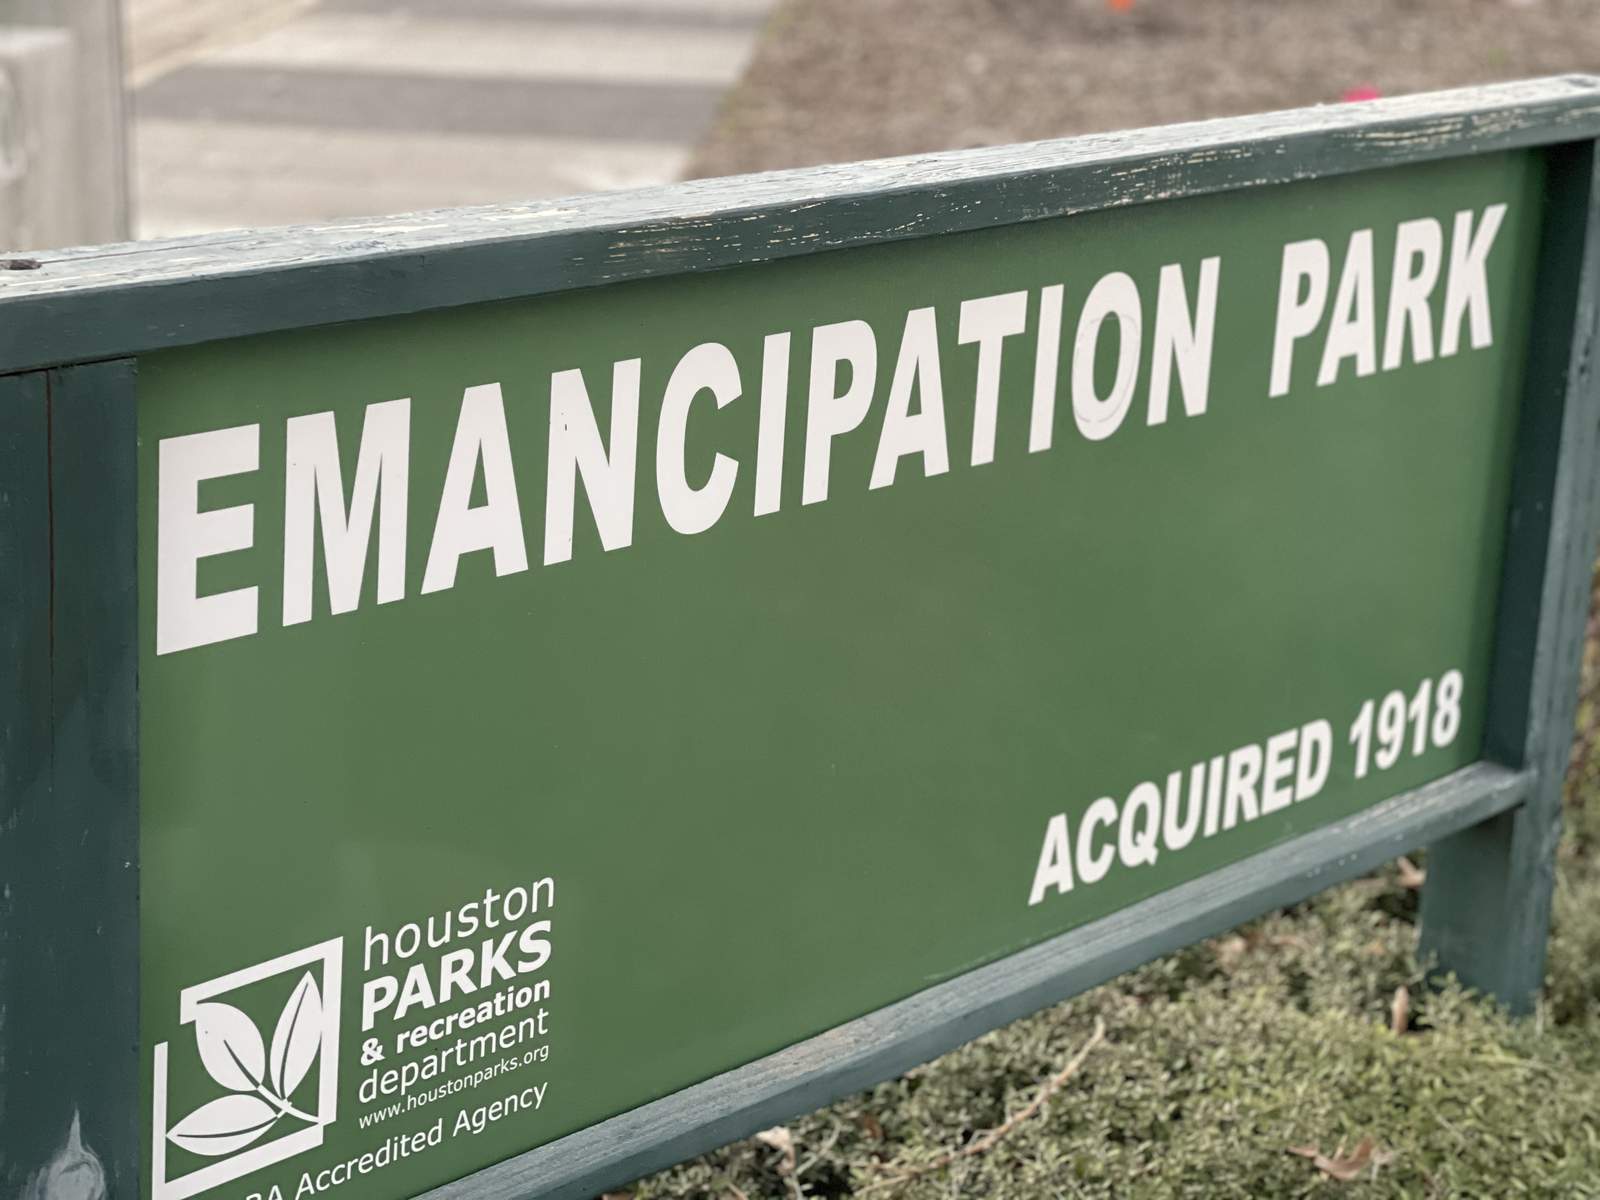 Emancipation Park has a history to tell